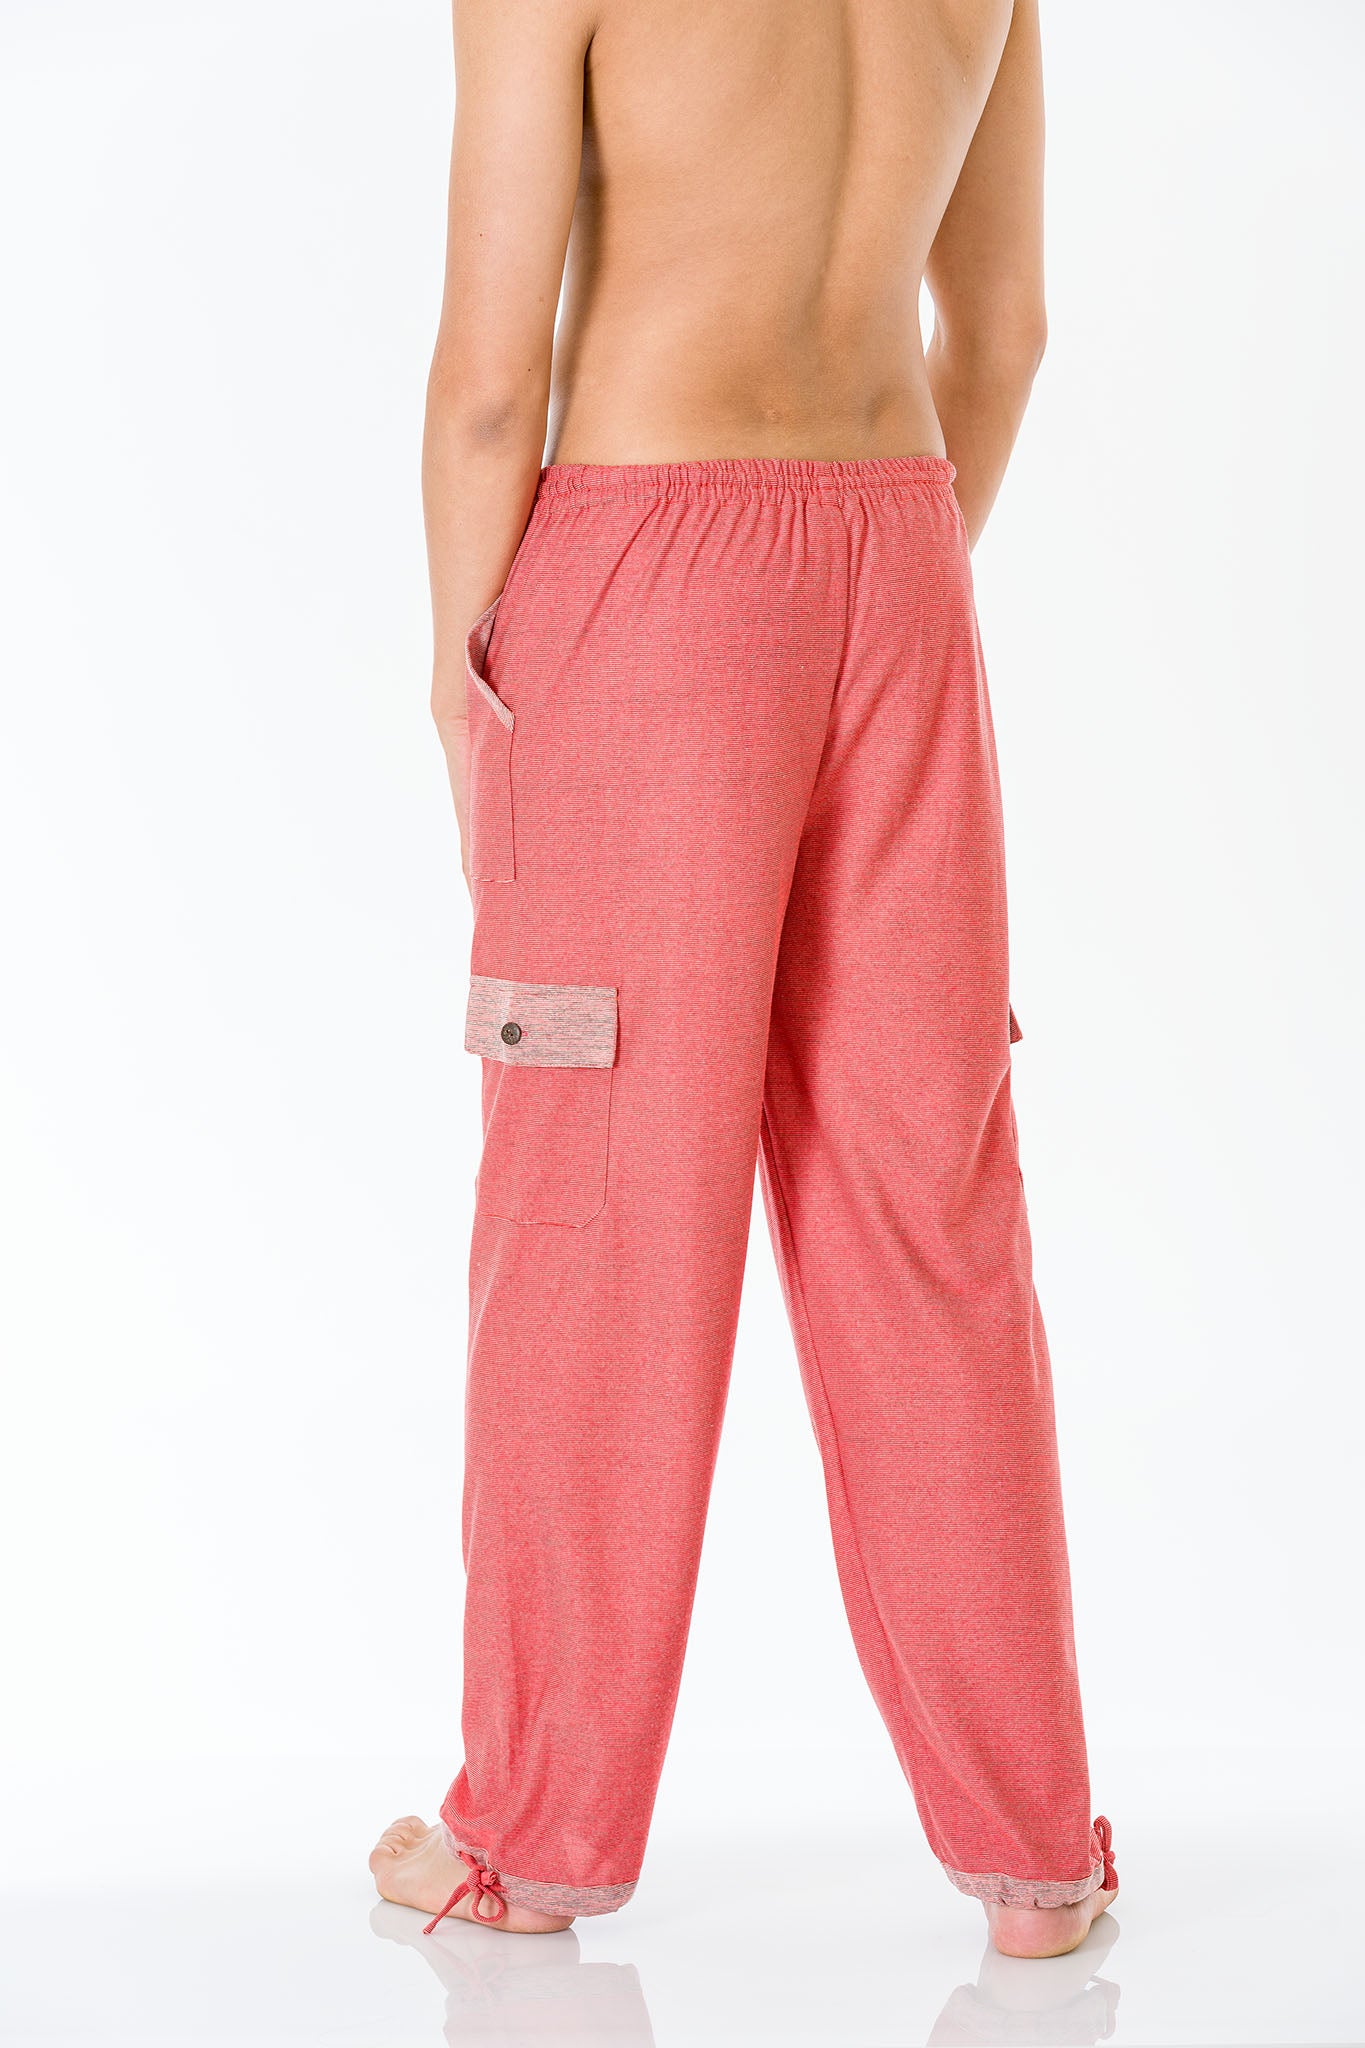 Pink coral salmon cotton pants for men